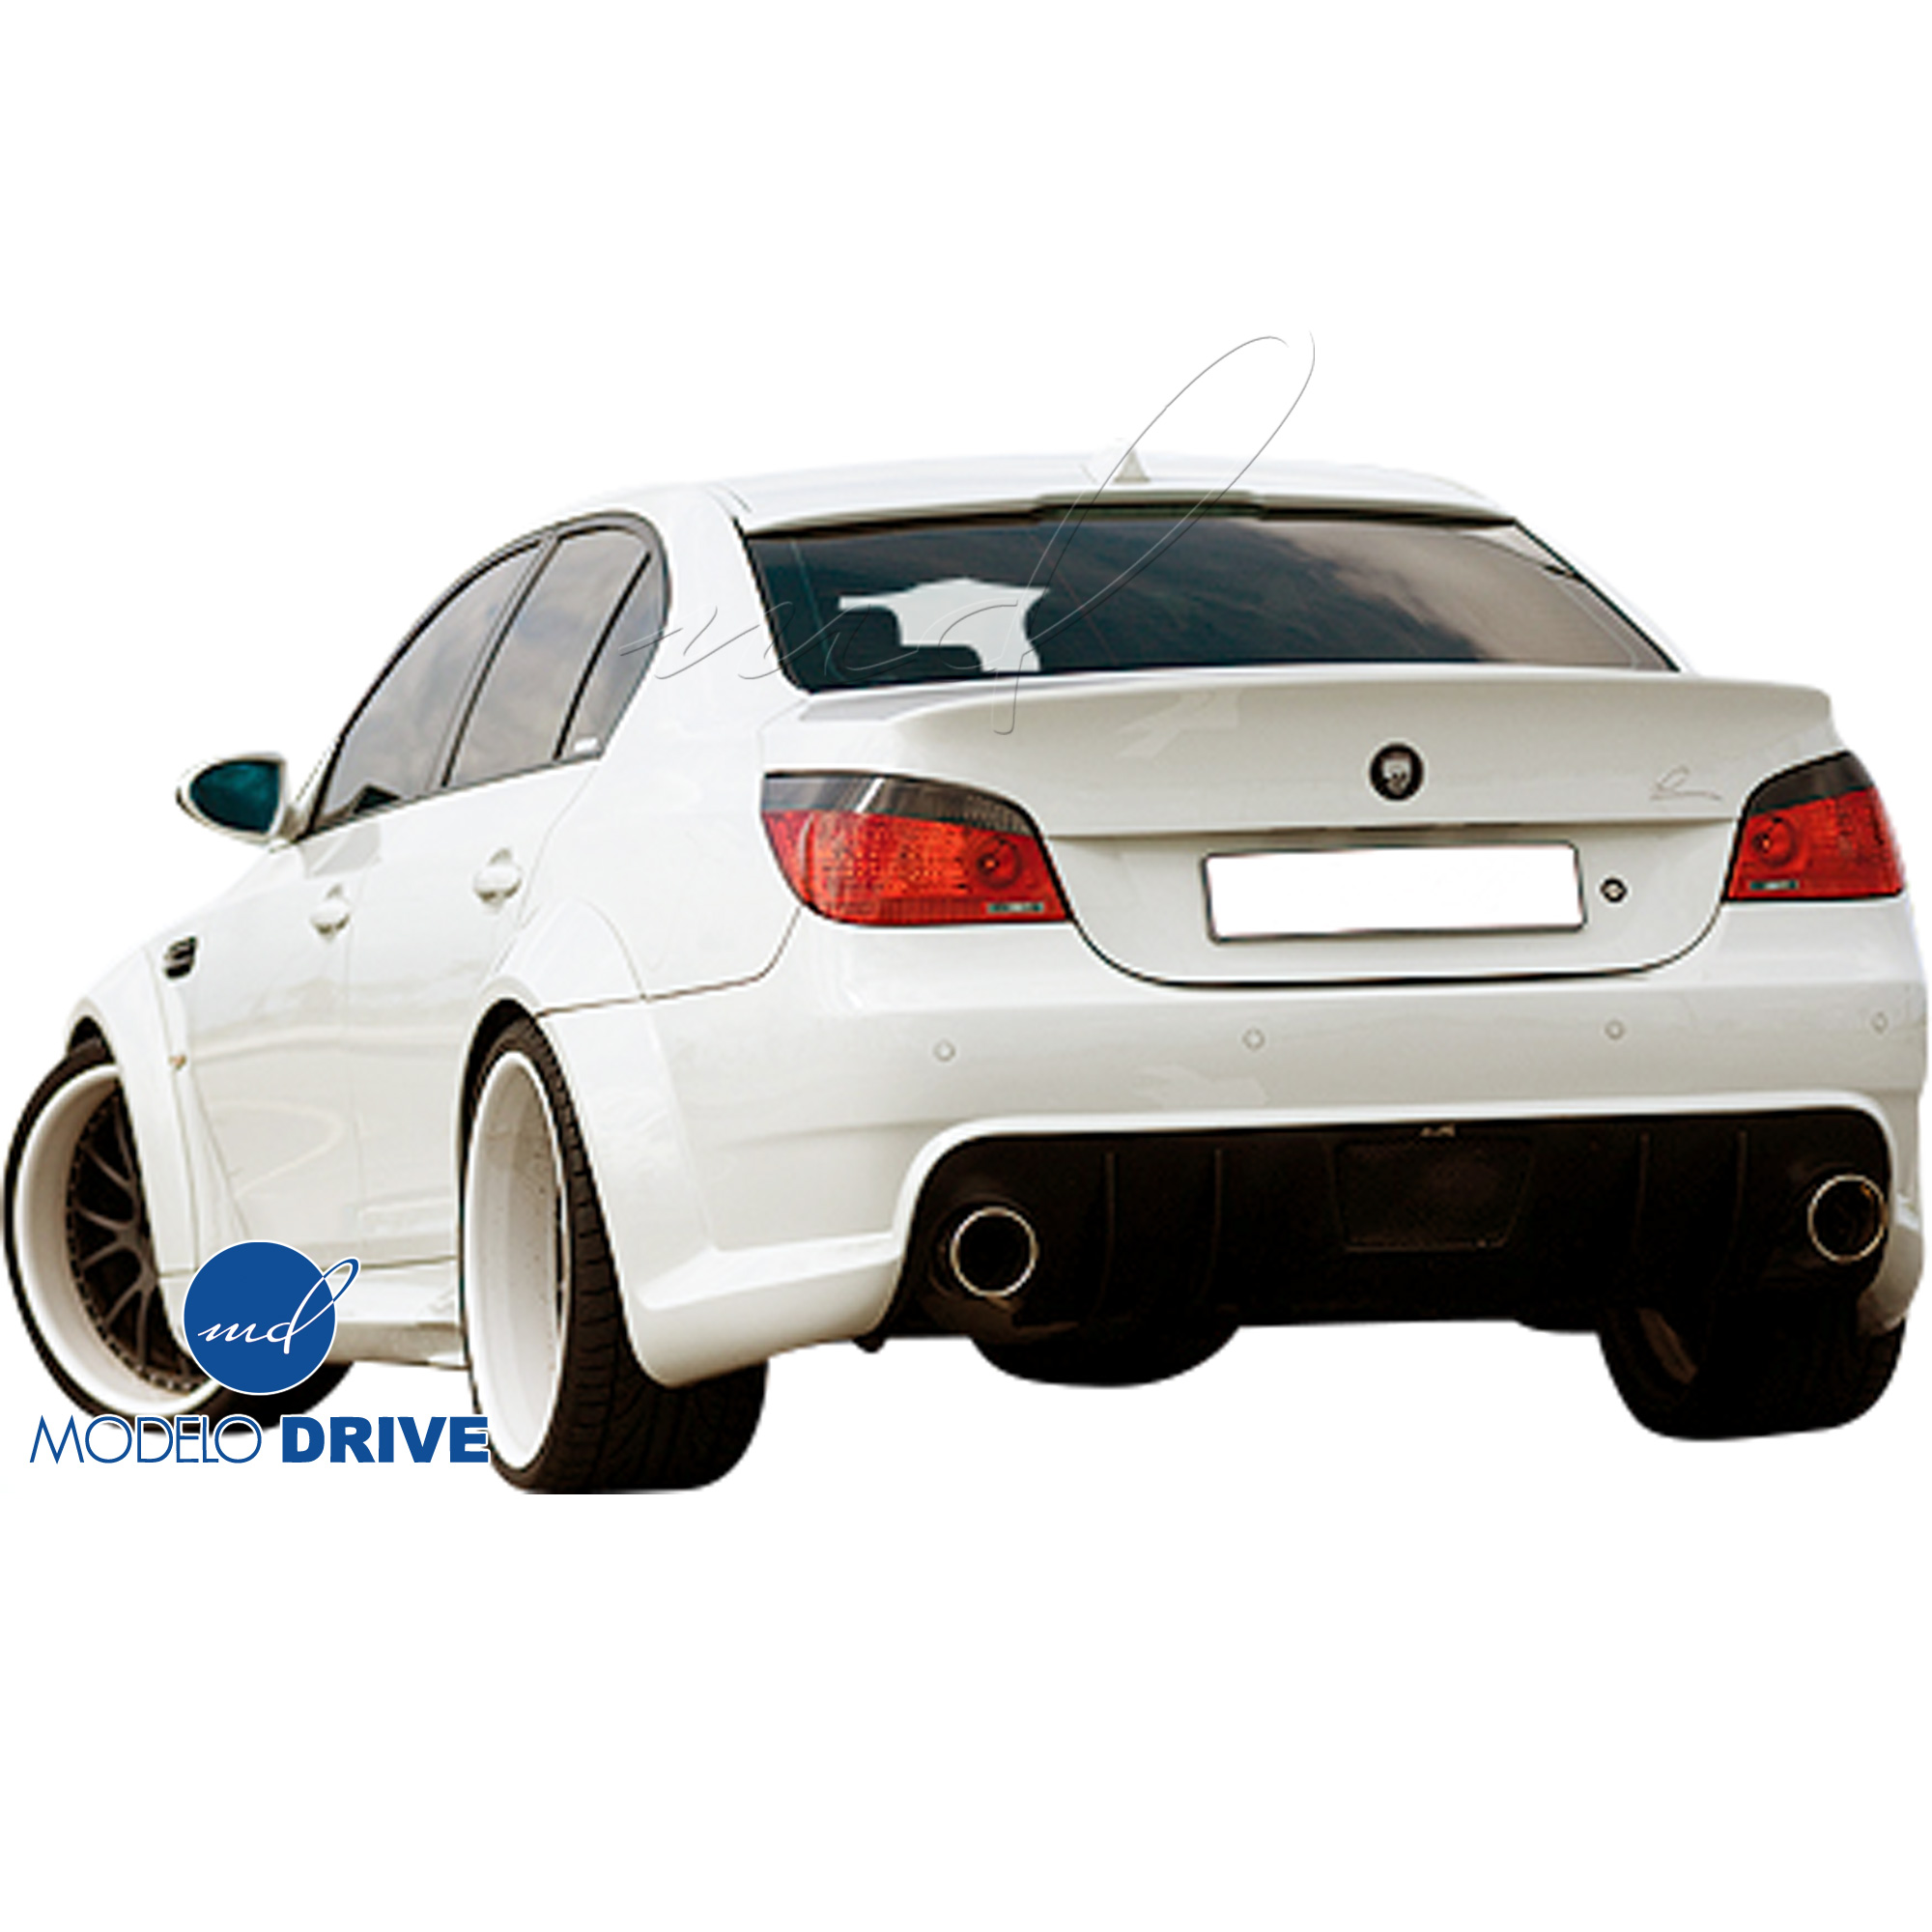 ModeloDrive FRP LUMM CL5RS Wide Body Rear Bumper > BMW 5-Series E60 2004-2010 > 4dr - Image 1